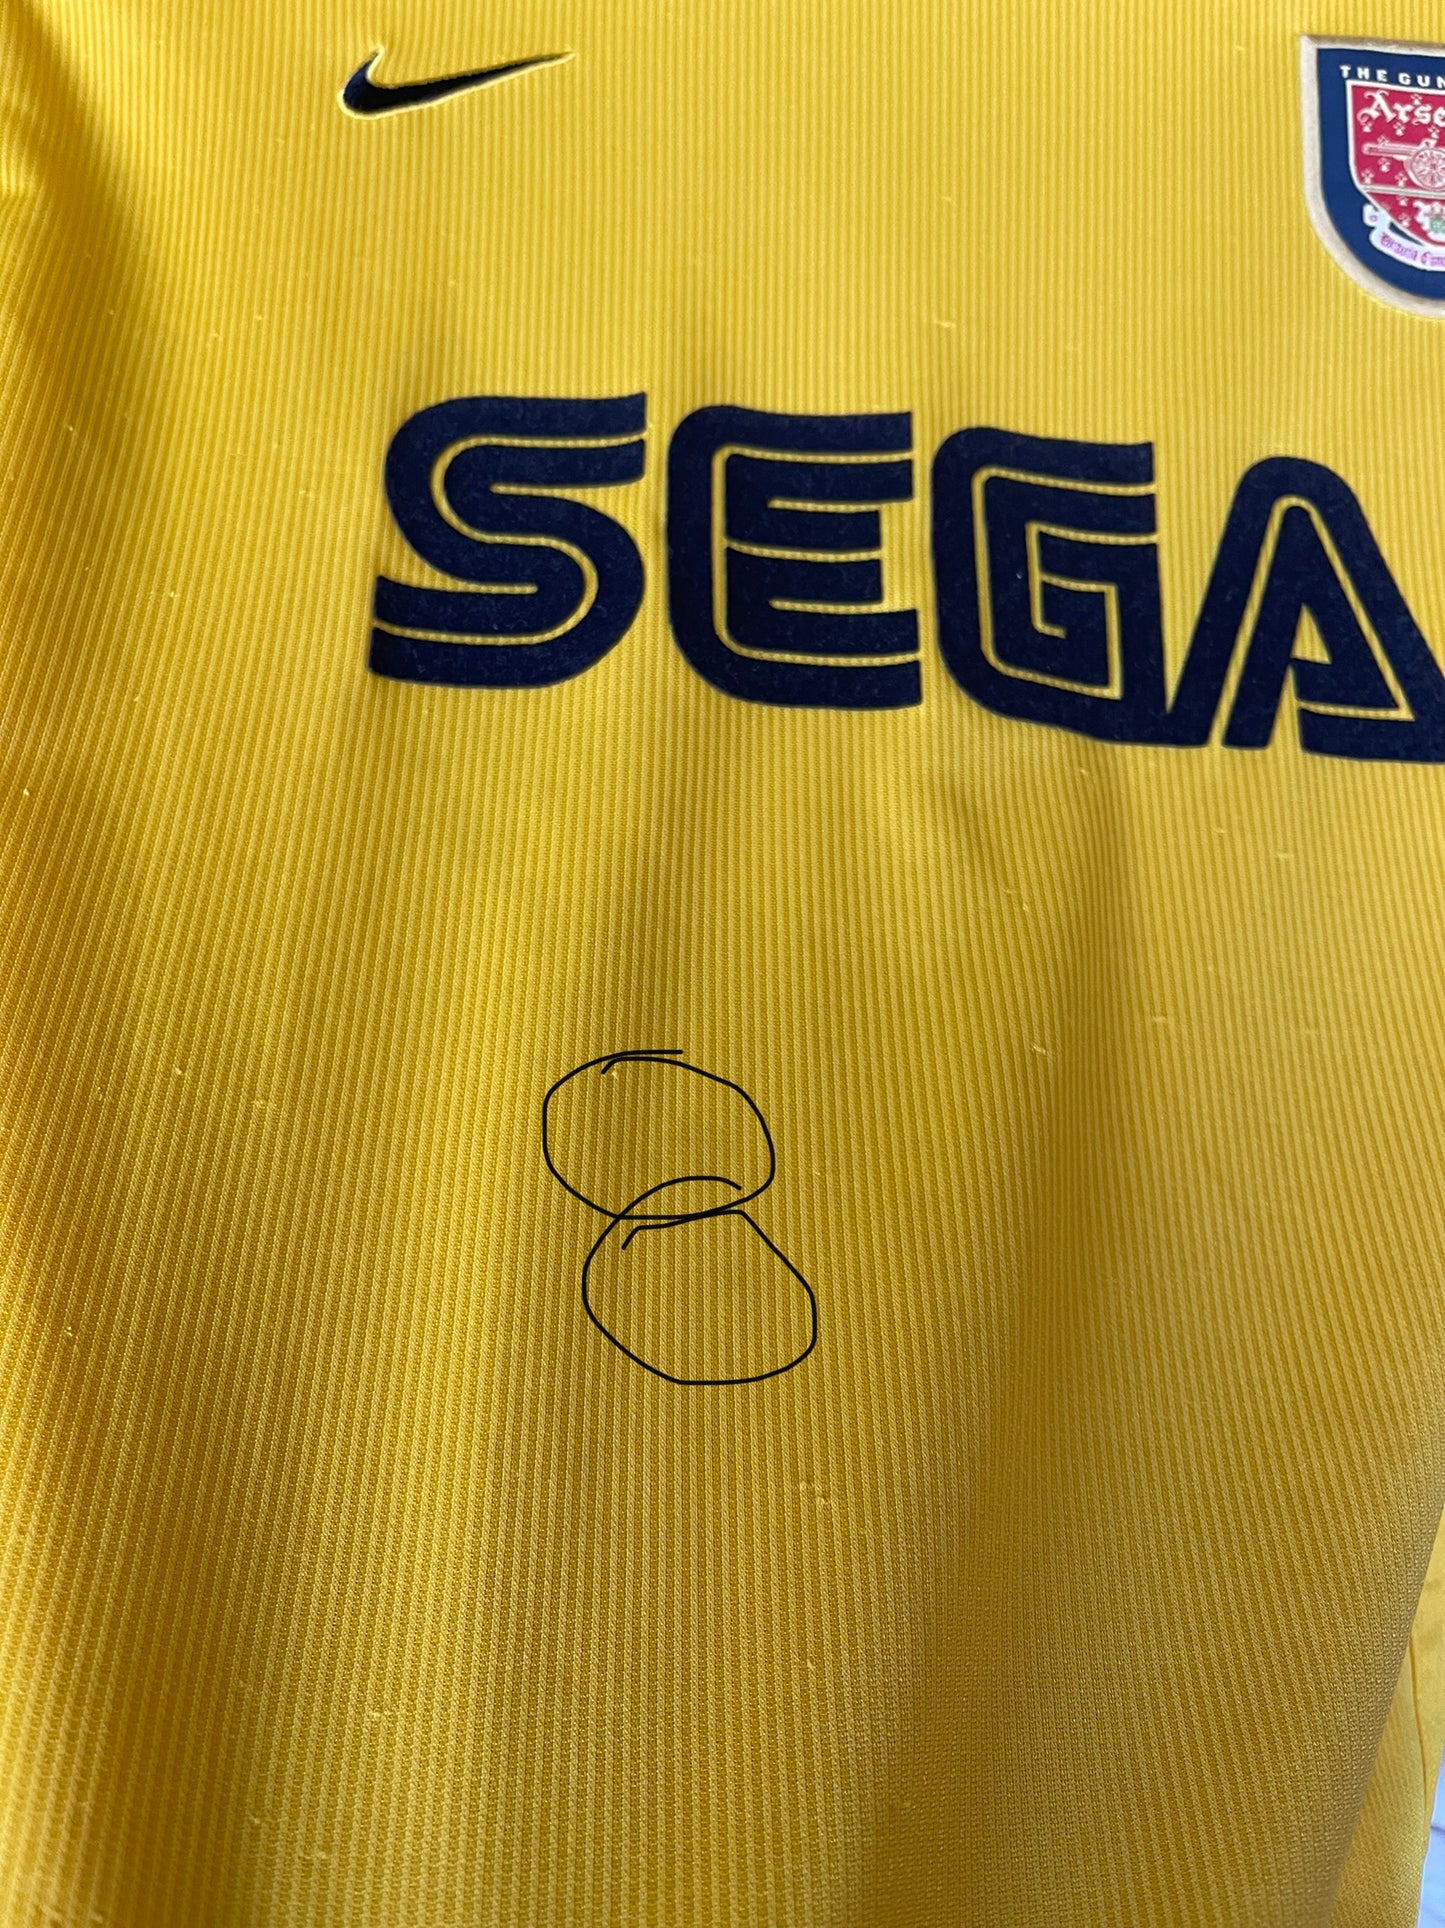 Arsenal Londra Dennis Bergkamp Nike #10 1999 2000 Away Football Shirt Sega Yellow Blue Size XXL